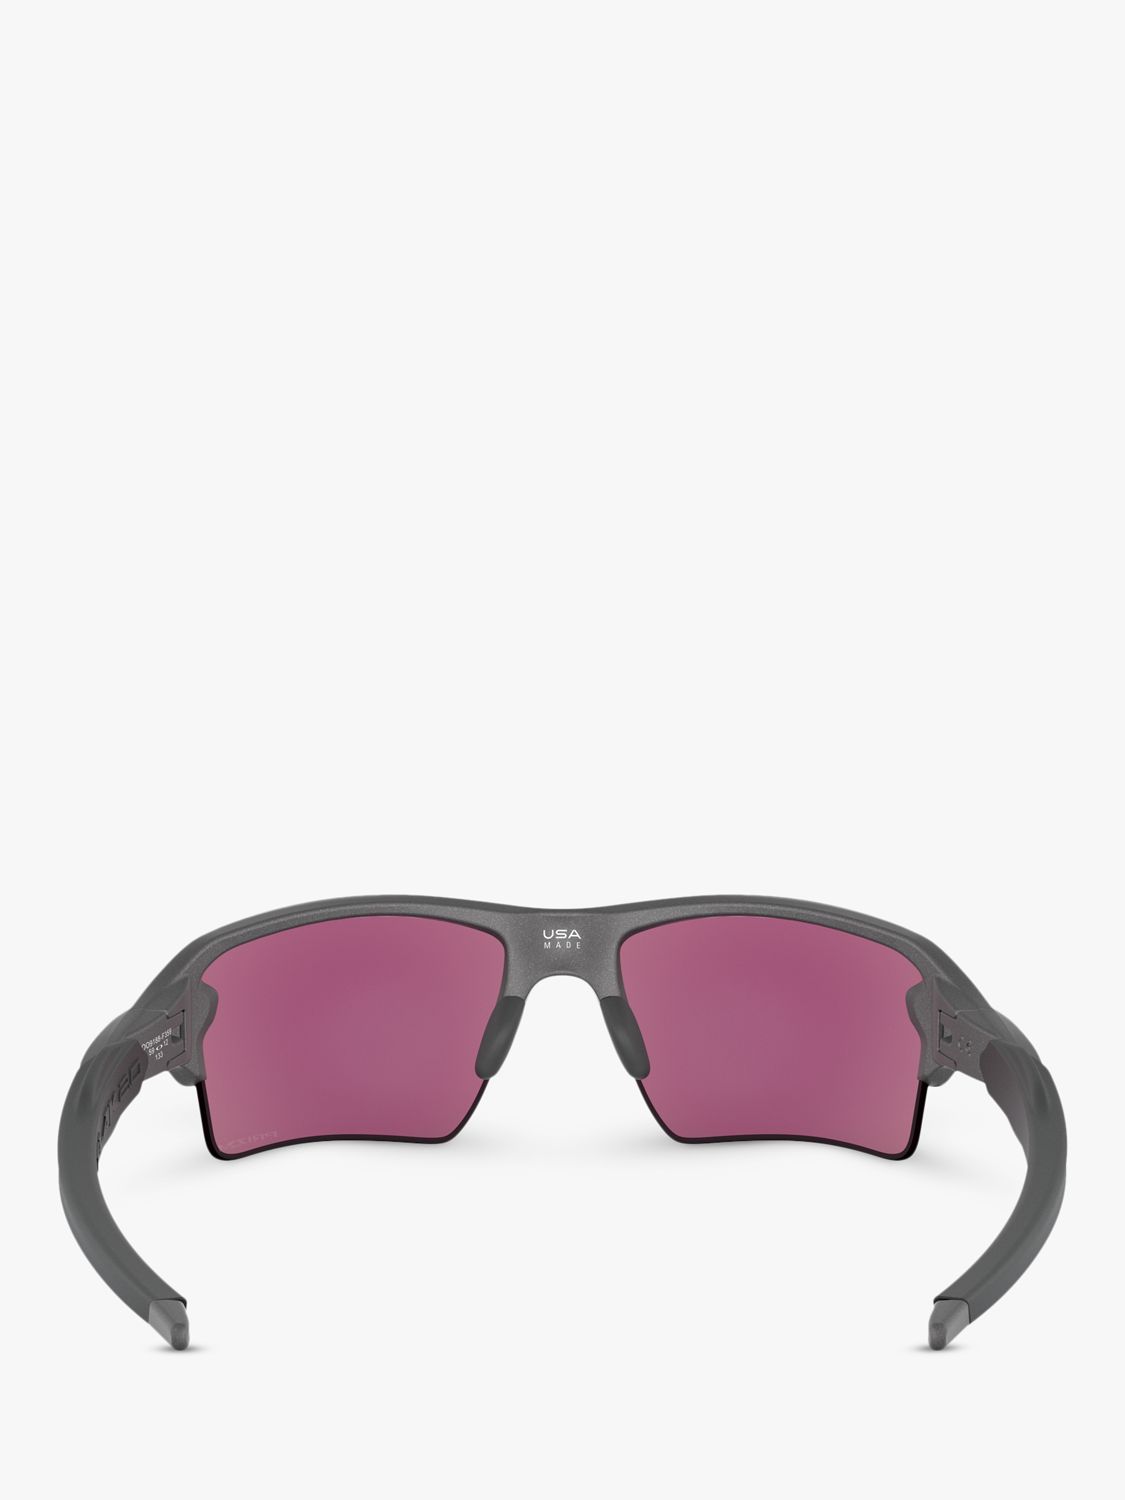 Oakley OO9188 Men's FLAK 2.0 XL Prizm Rectangular Sunglasses, Steel/Mirror Multi